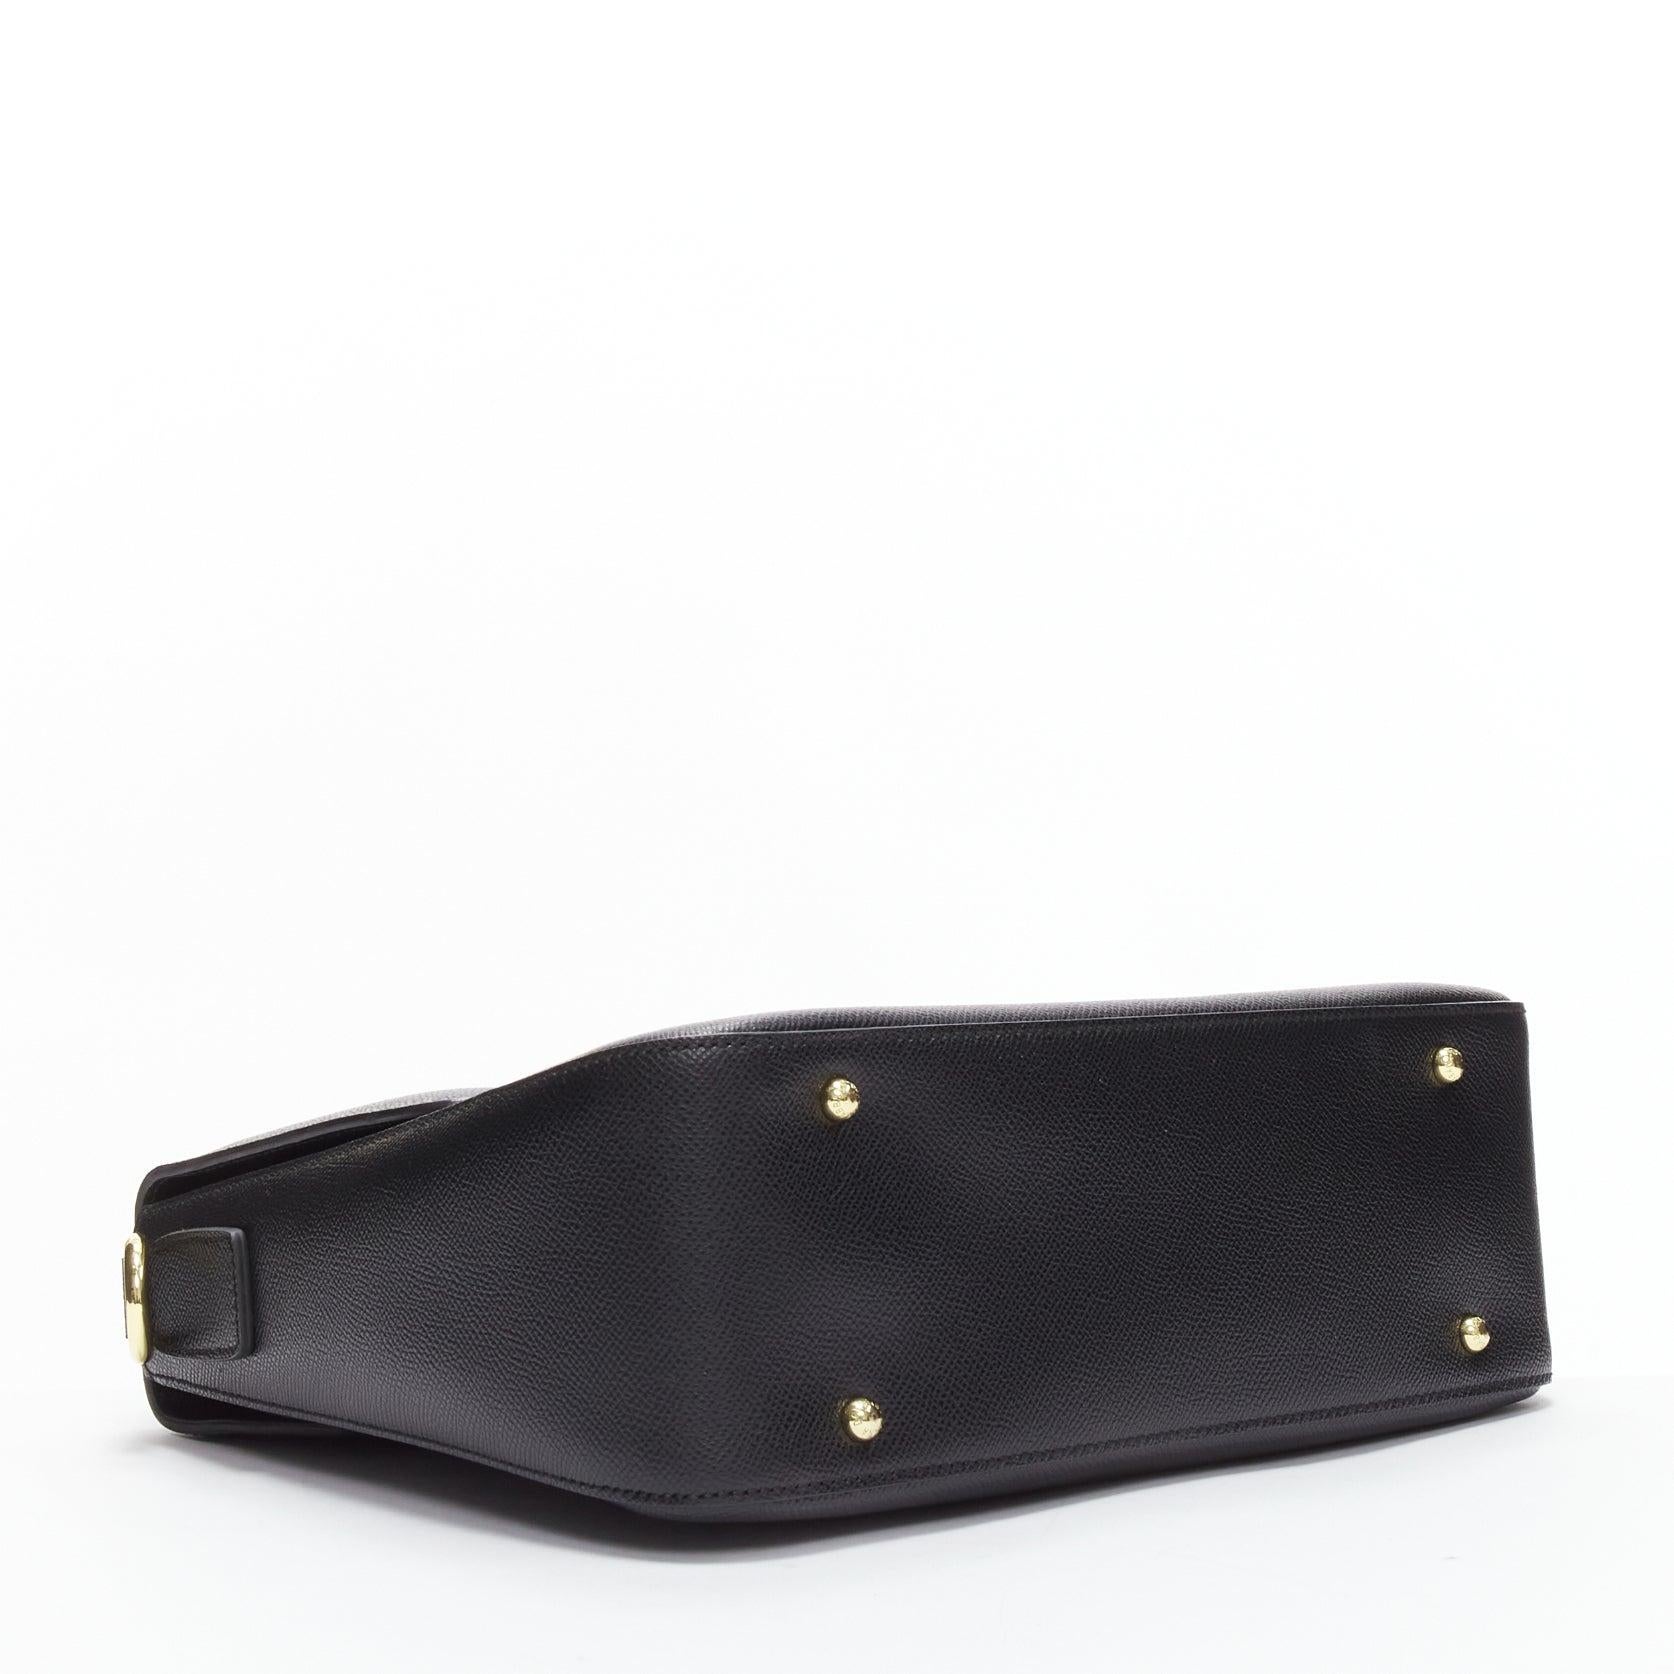 DOLCE GABBANA Miss Linda black saffiano leather gold buckle flap bag For Sale 1